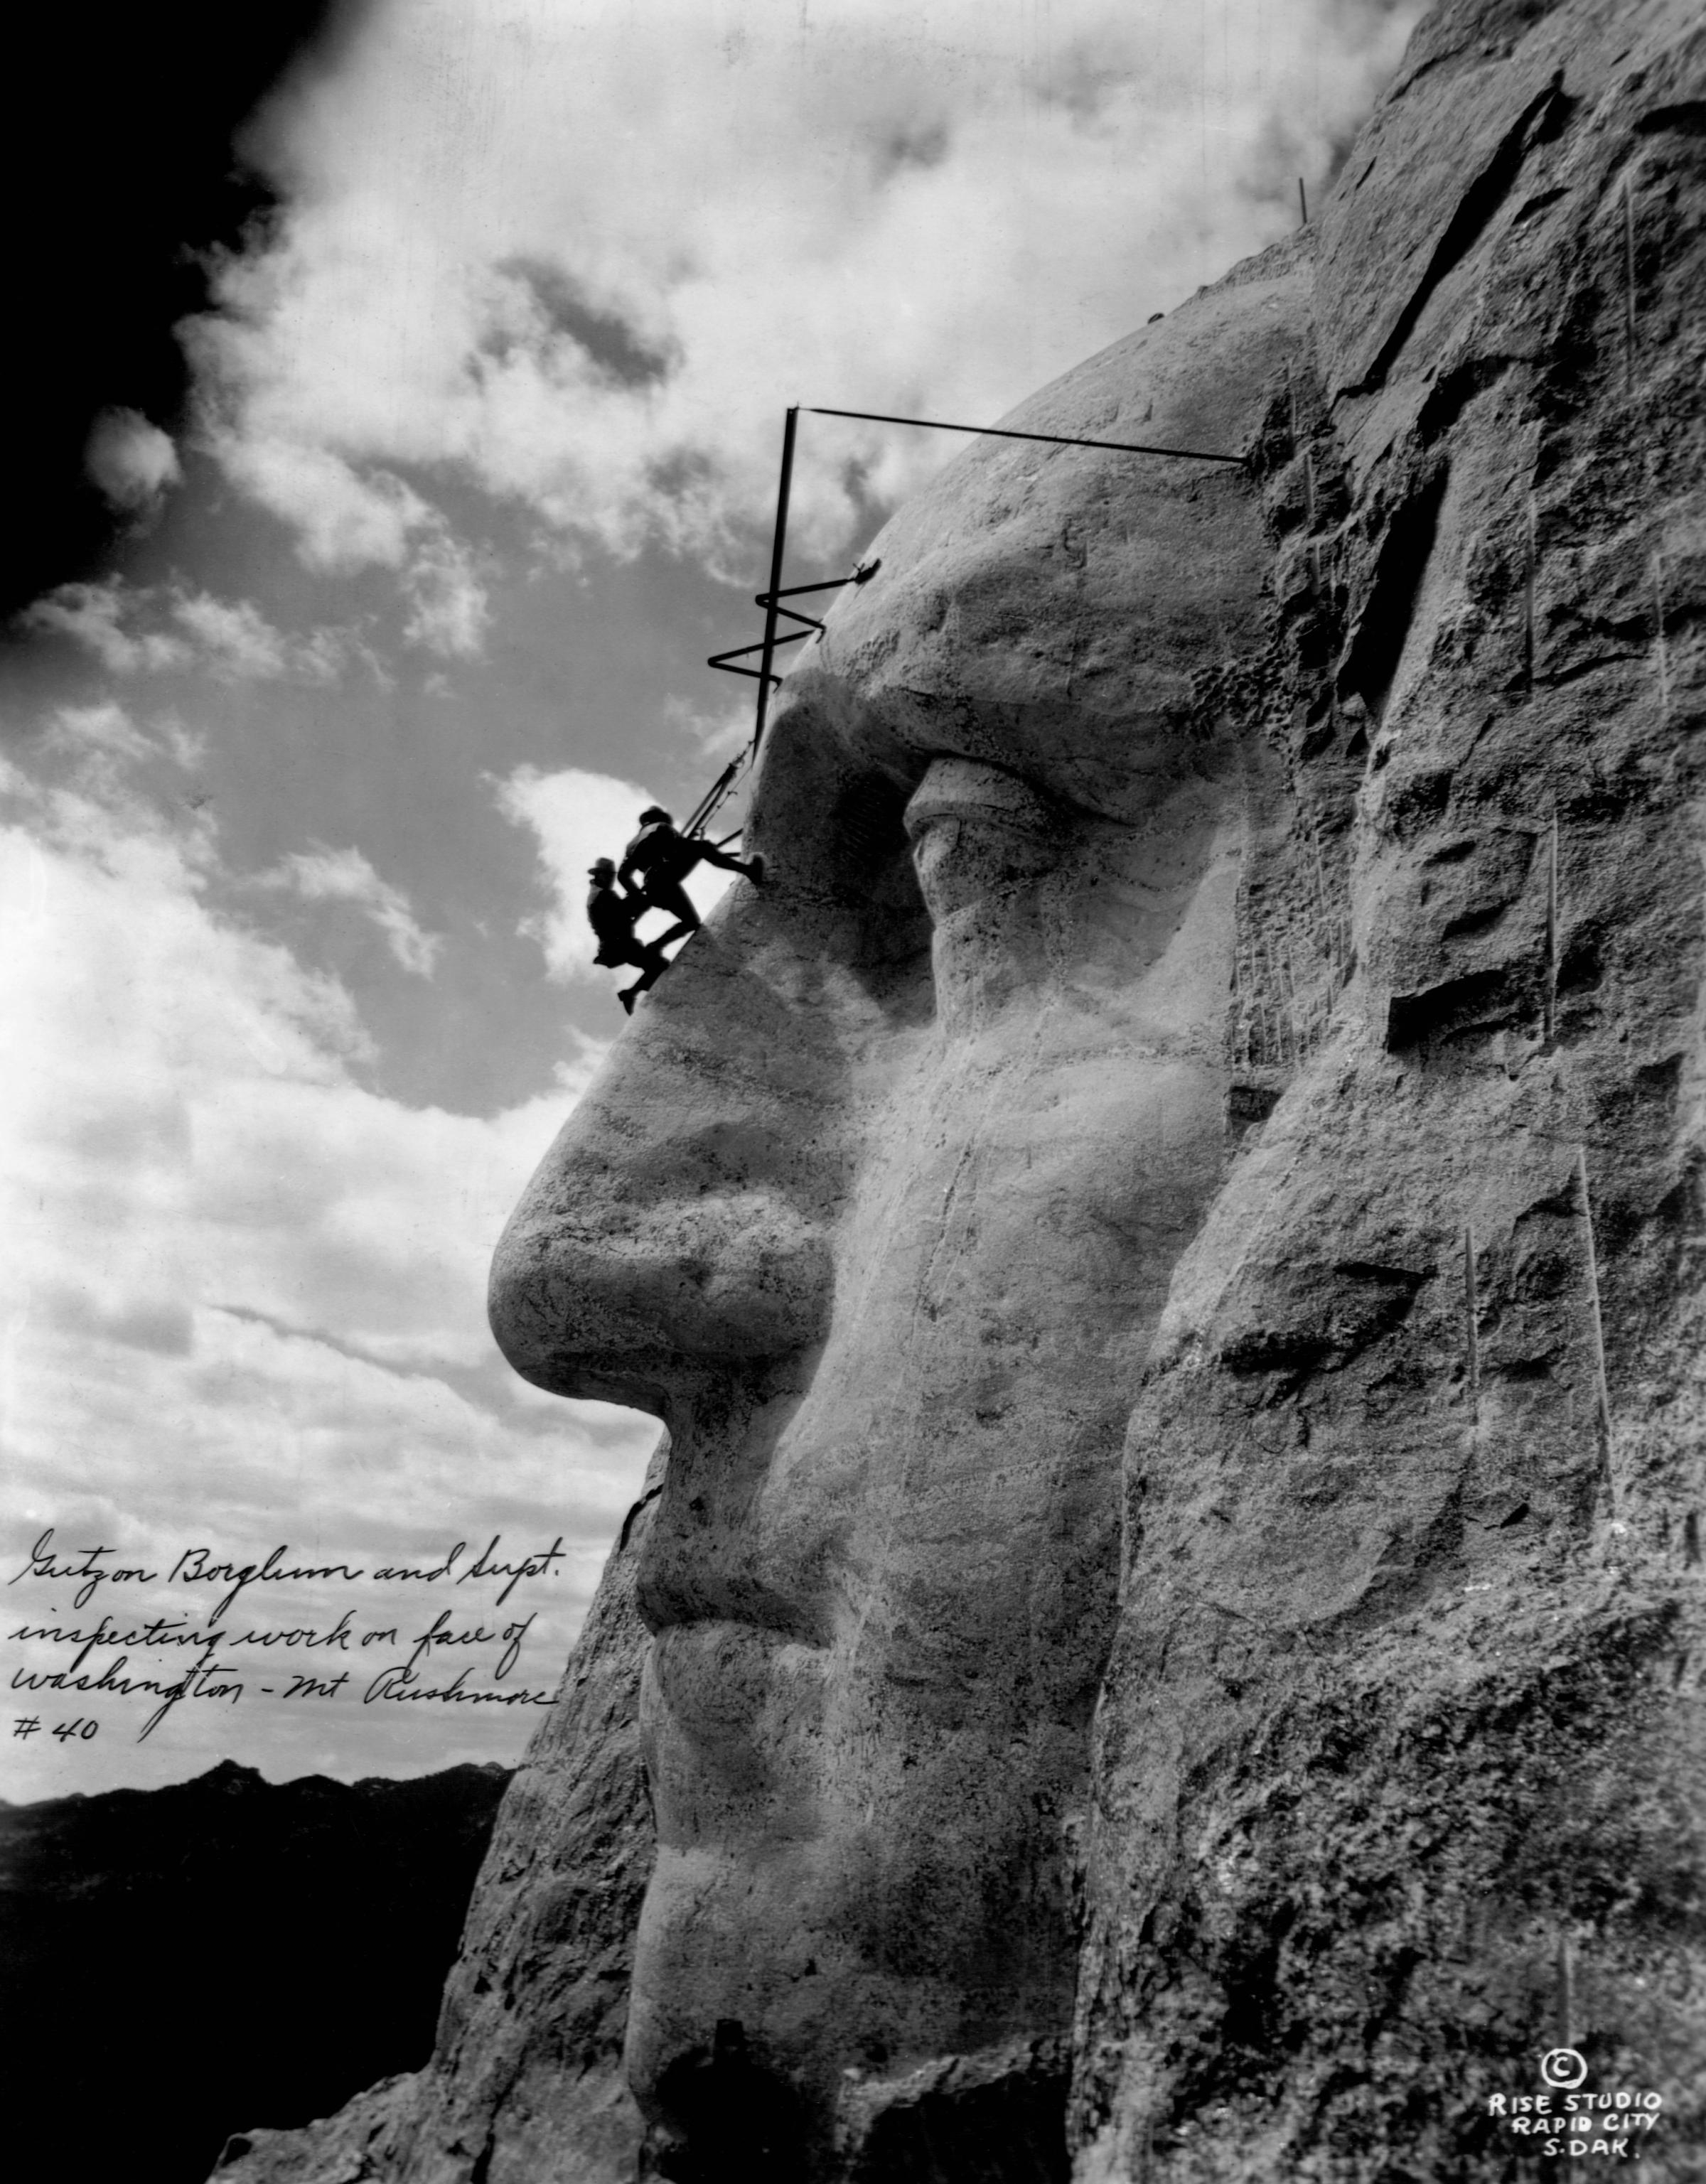 Gutzon Borglum Inspecting Washington's Statue on Mount Rushmore